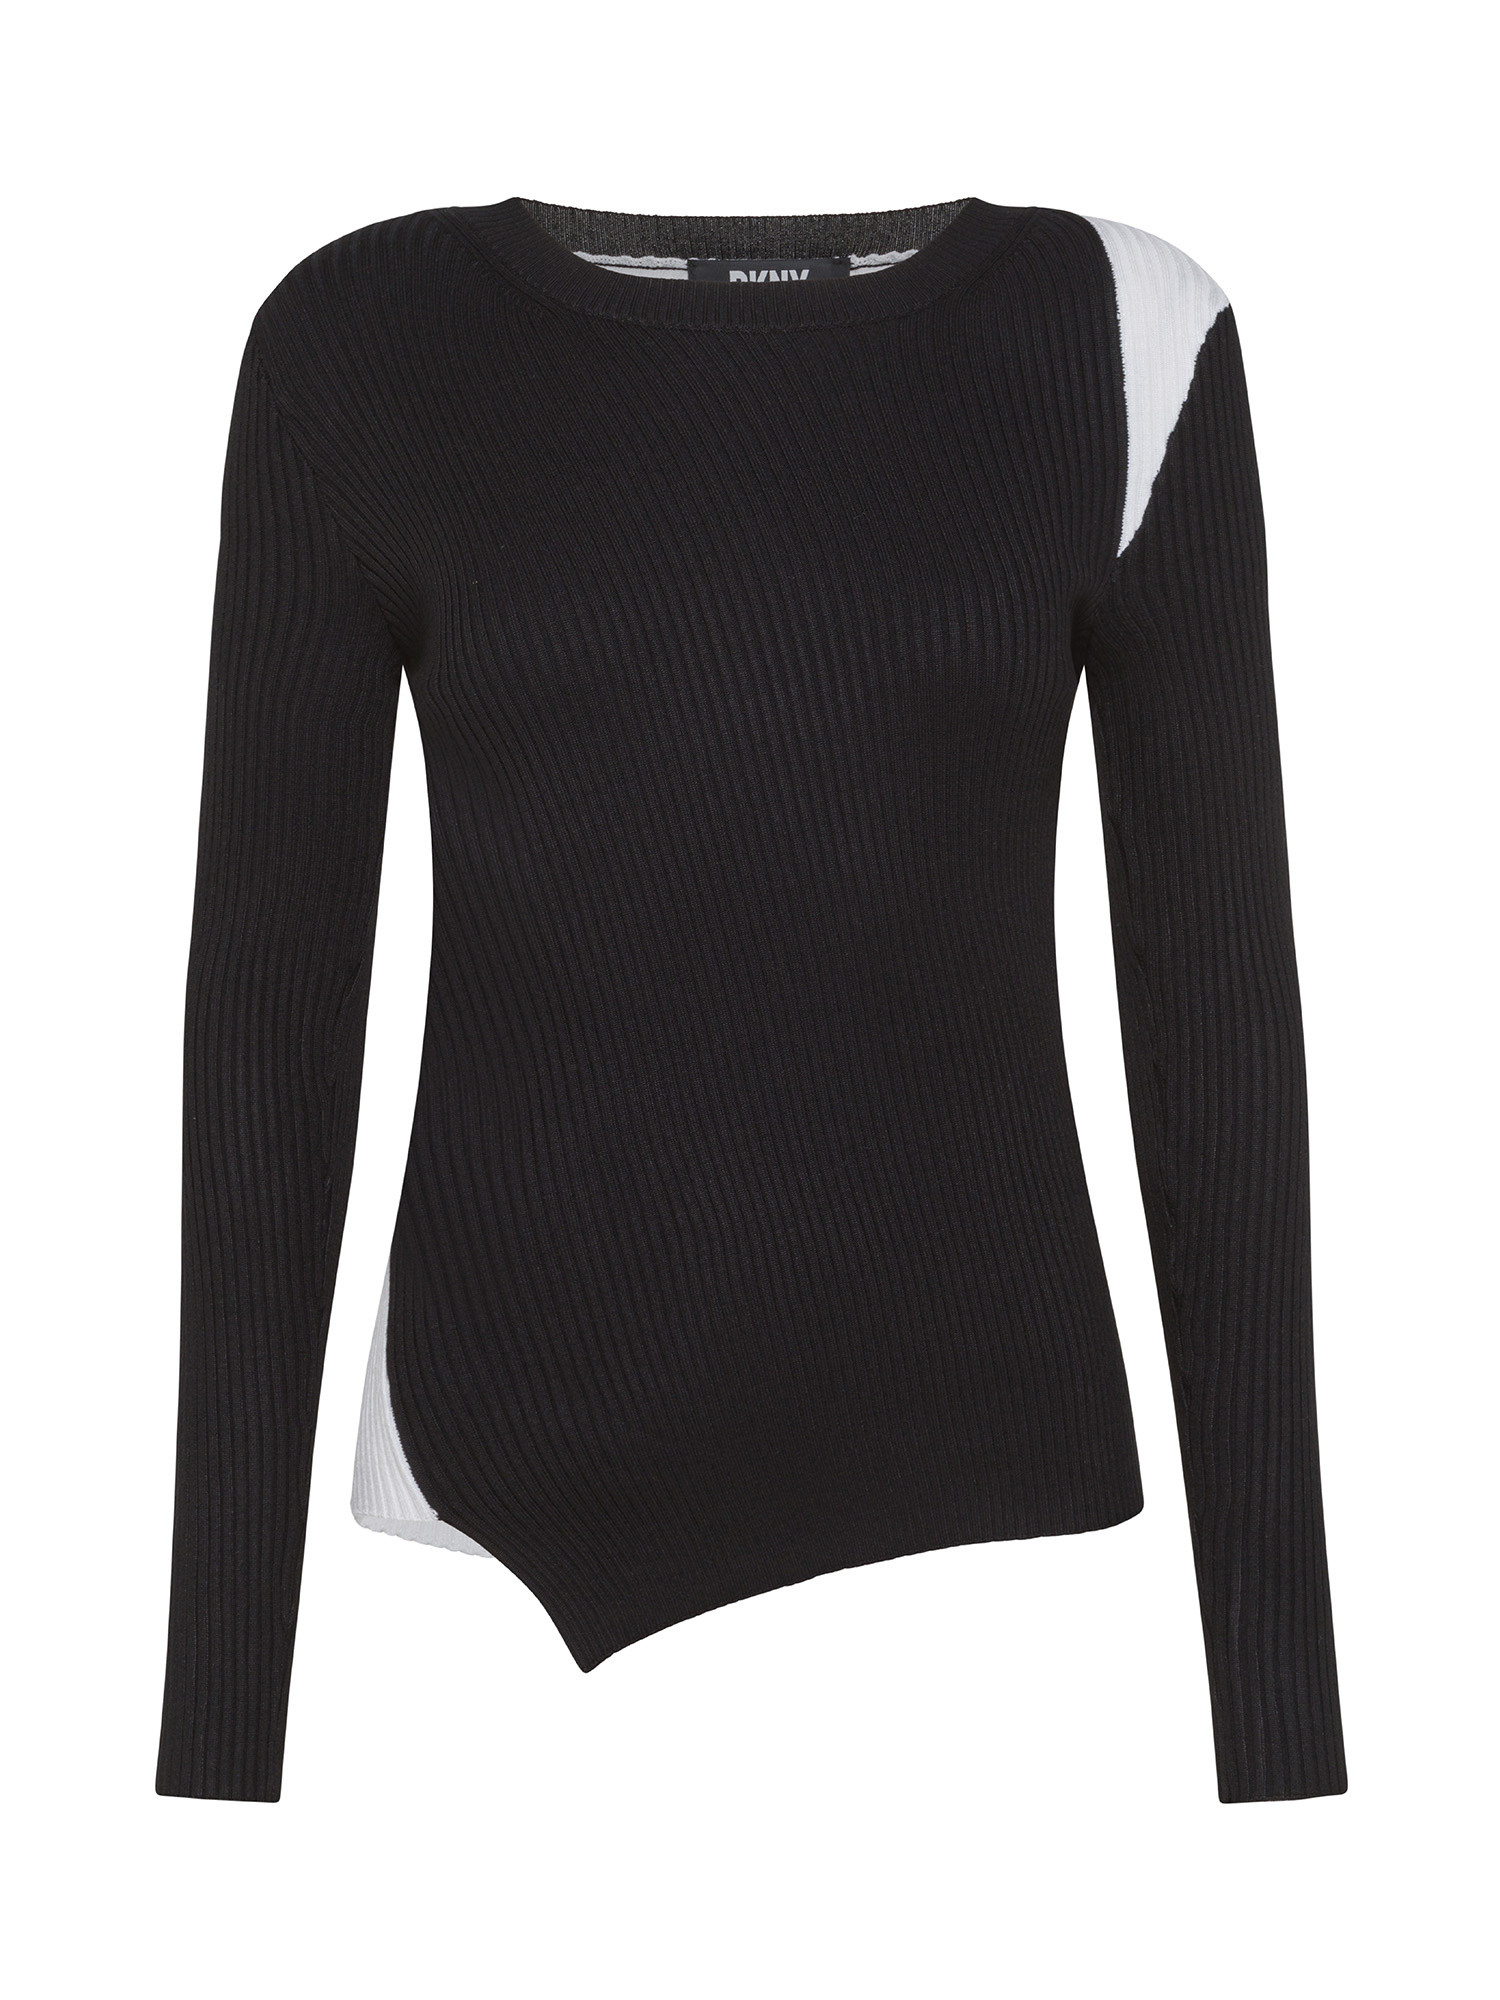 DKNY - Color block crewneck sweater, Black, large image number 0